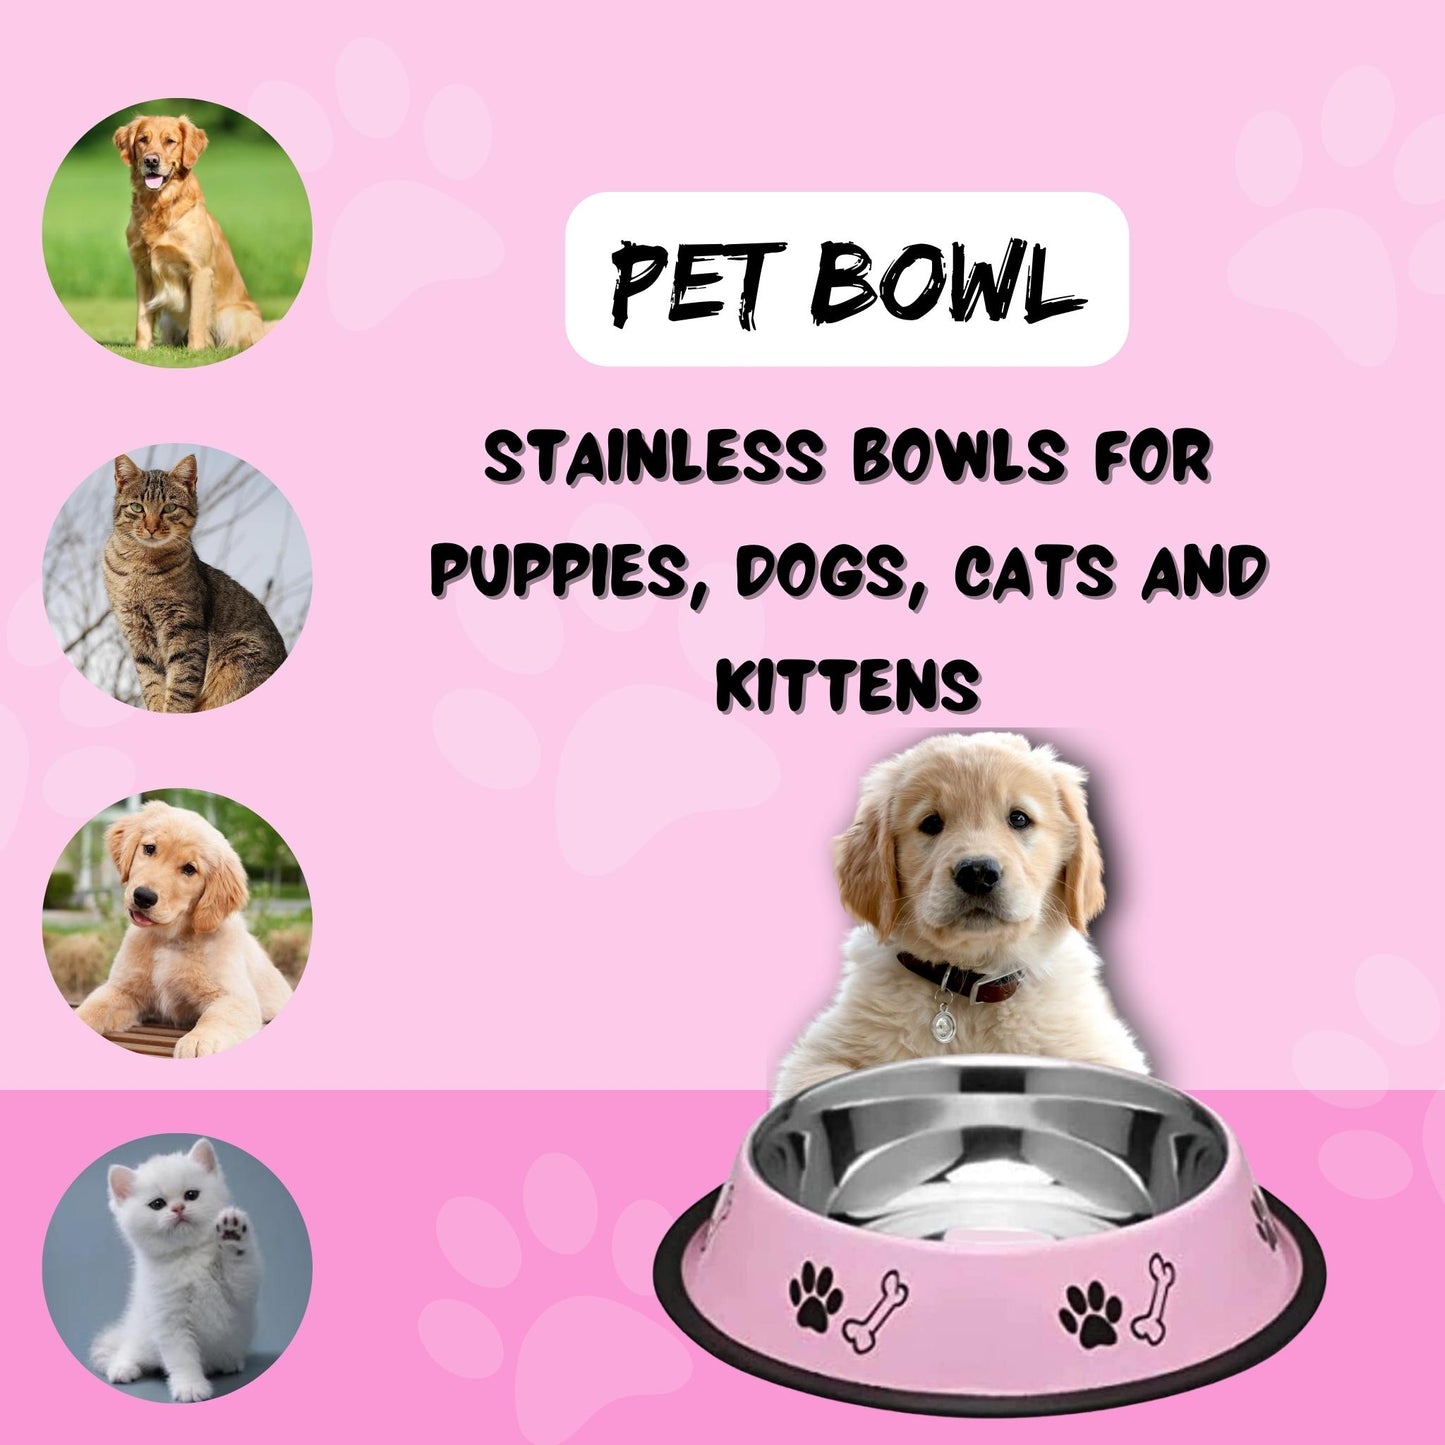 Foodie Puppies Printed Steel Bowl for Pets - 700ml (Baby Pink)